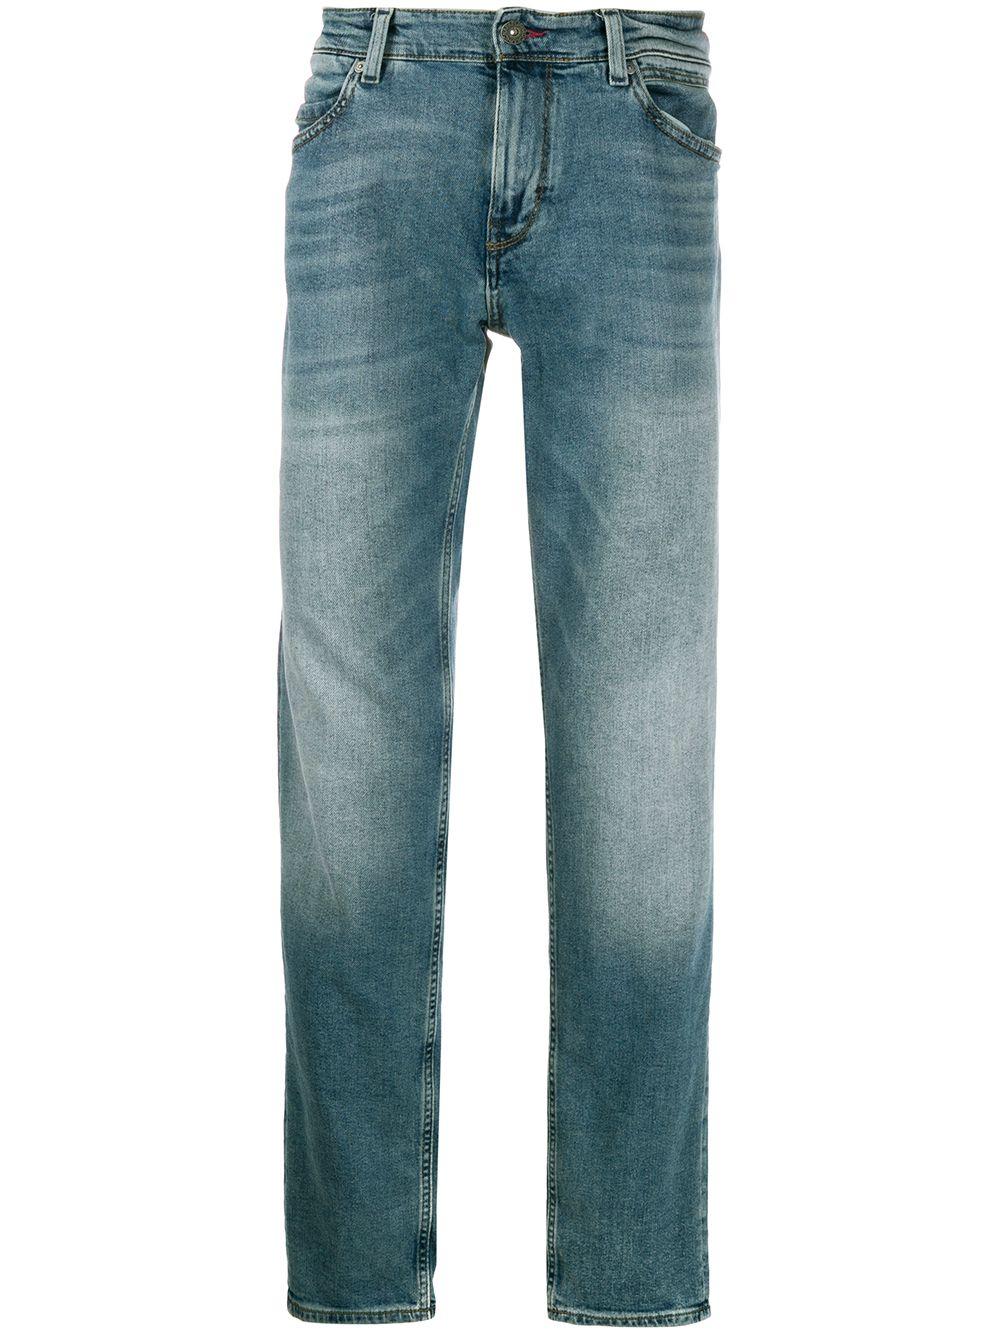 Napapijri Lund Jeans in Blue for Men - Lyst